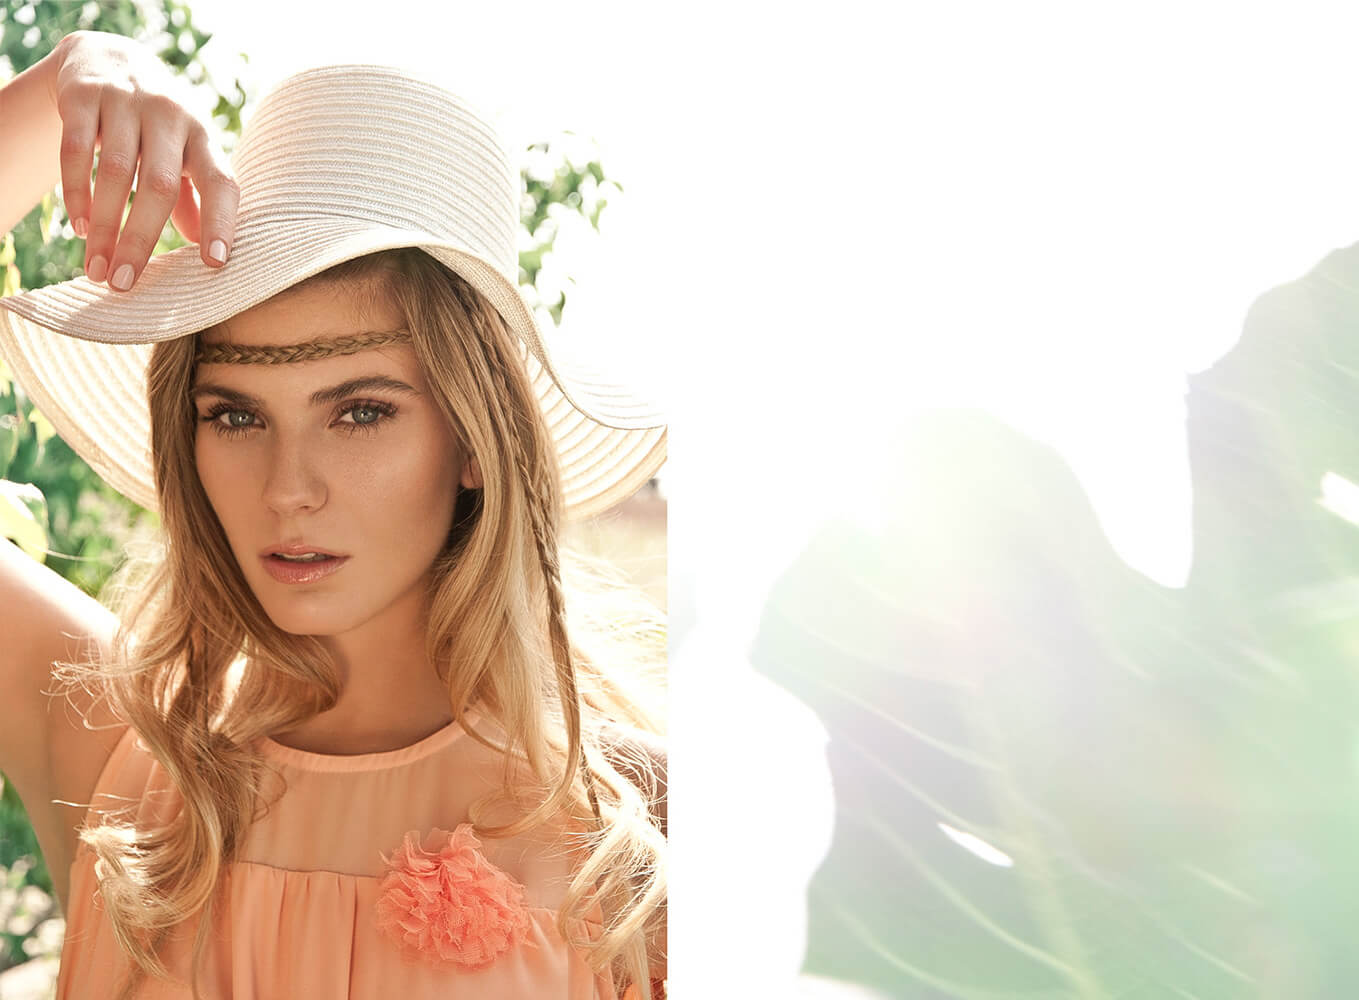 Angel-Ruiz-Ruiz-Fashion-Photographer-Campaign-SS-2015-Divina-Providencia-Hipster-Madrid-Coral-Dress-Hat-1498x1000